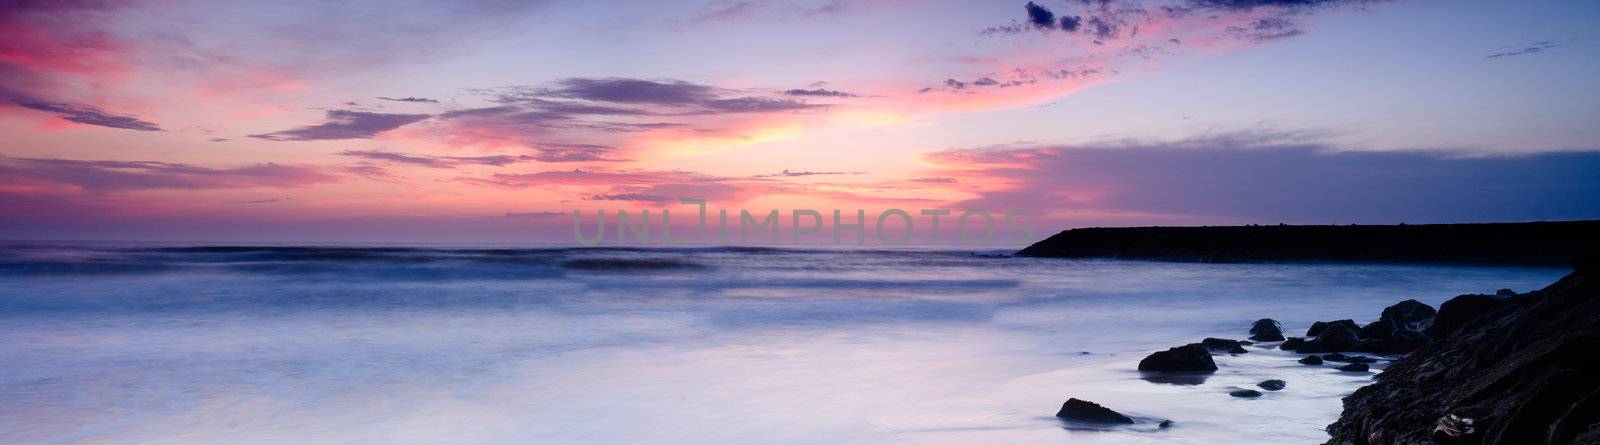 Sunset on a beach, beautiful sky and silky water arround rocks.